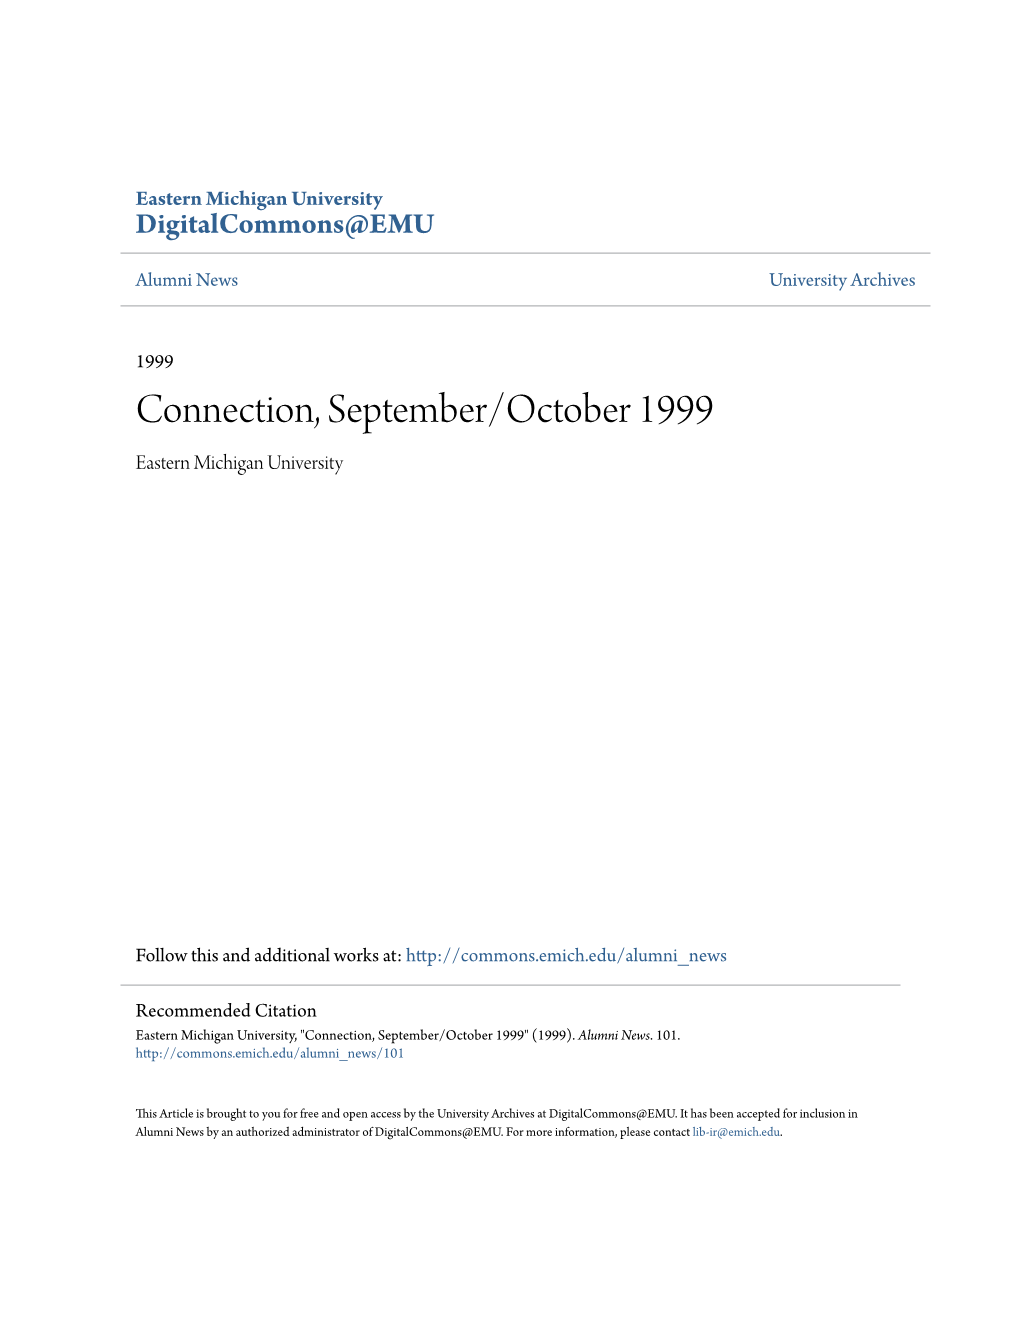 Connection, September/October 1999 Eastern Michigan University